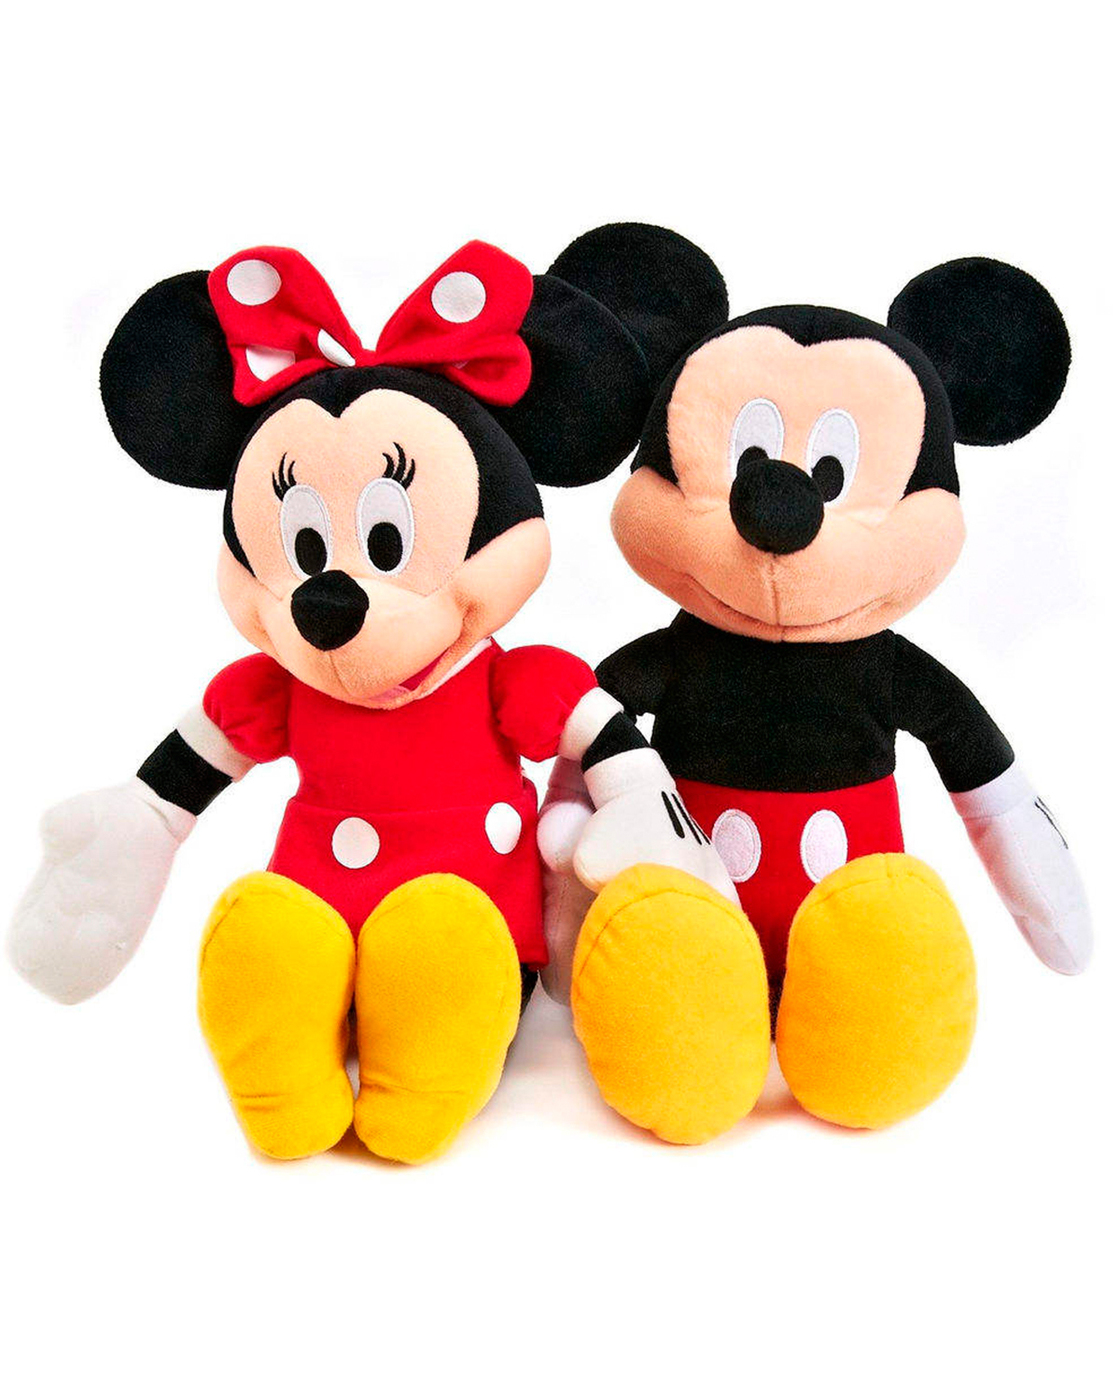 Мягкие игрушки Микки и Минни Маус Mickey Minnie Mouse, 2 шт. 35 см мягкая игрушка anedy микки маус 50 см